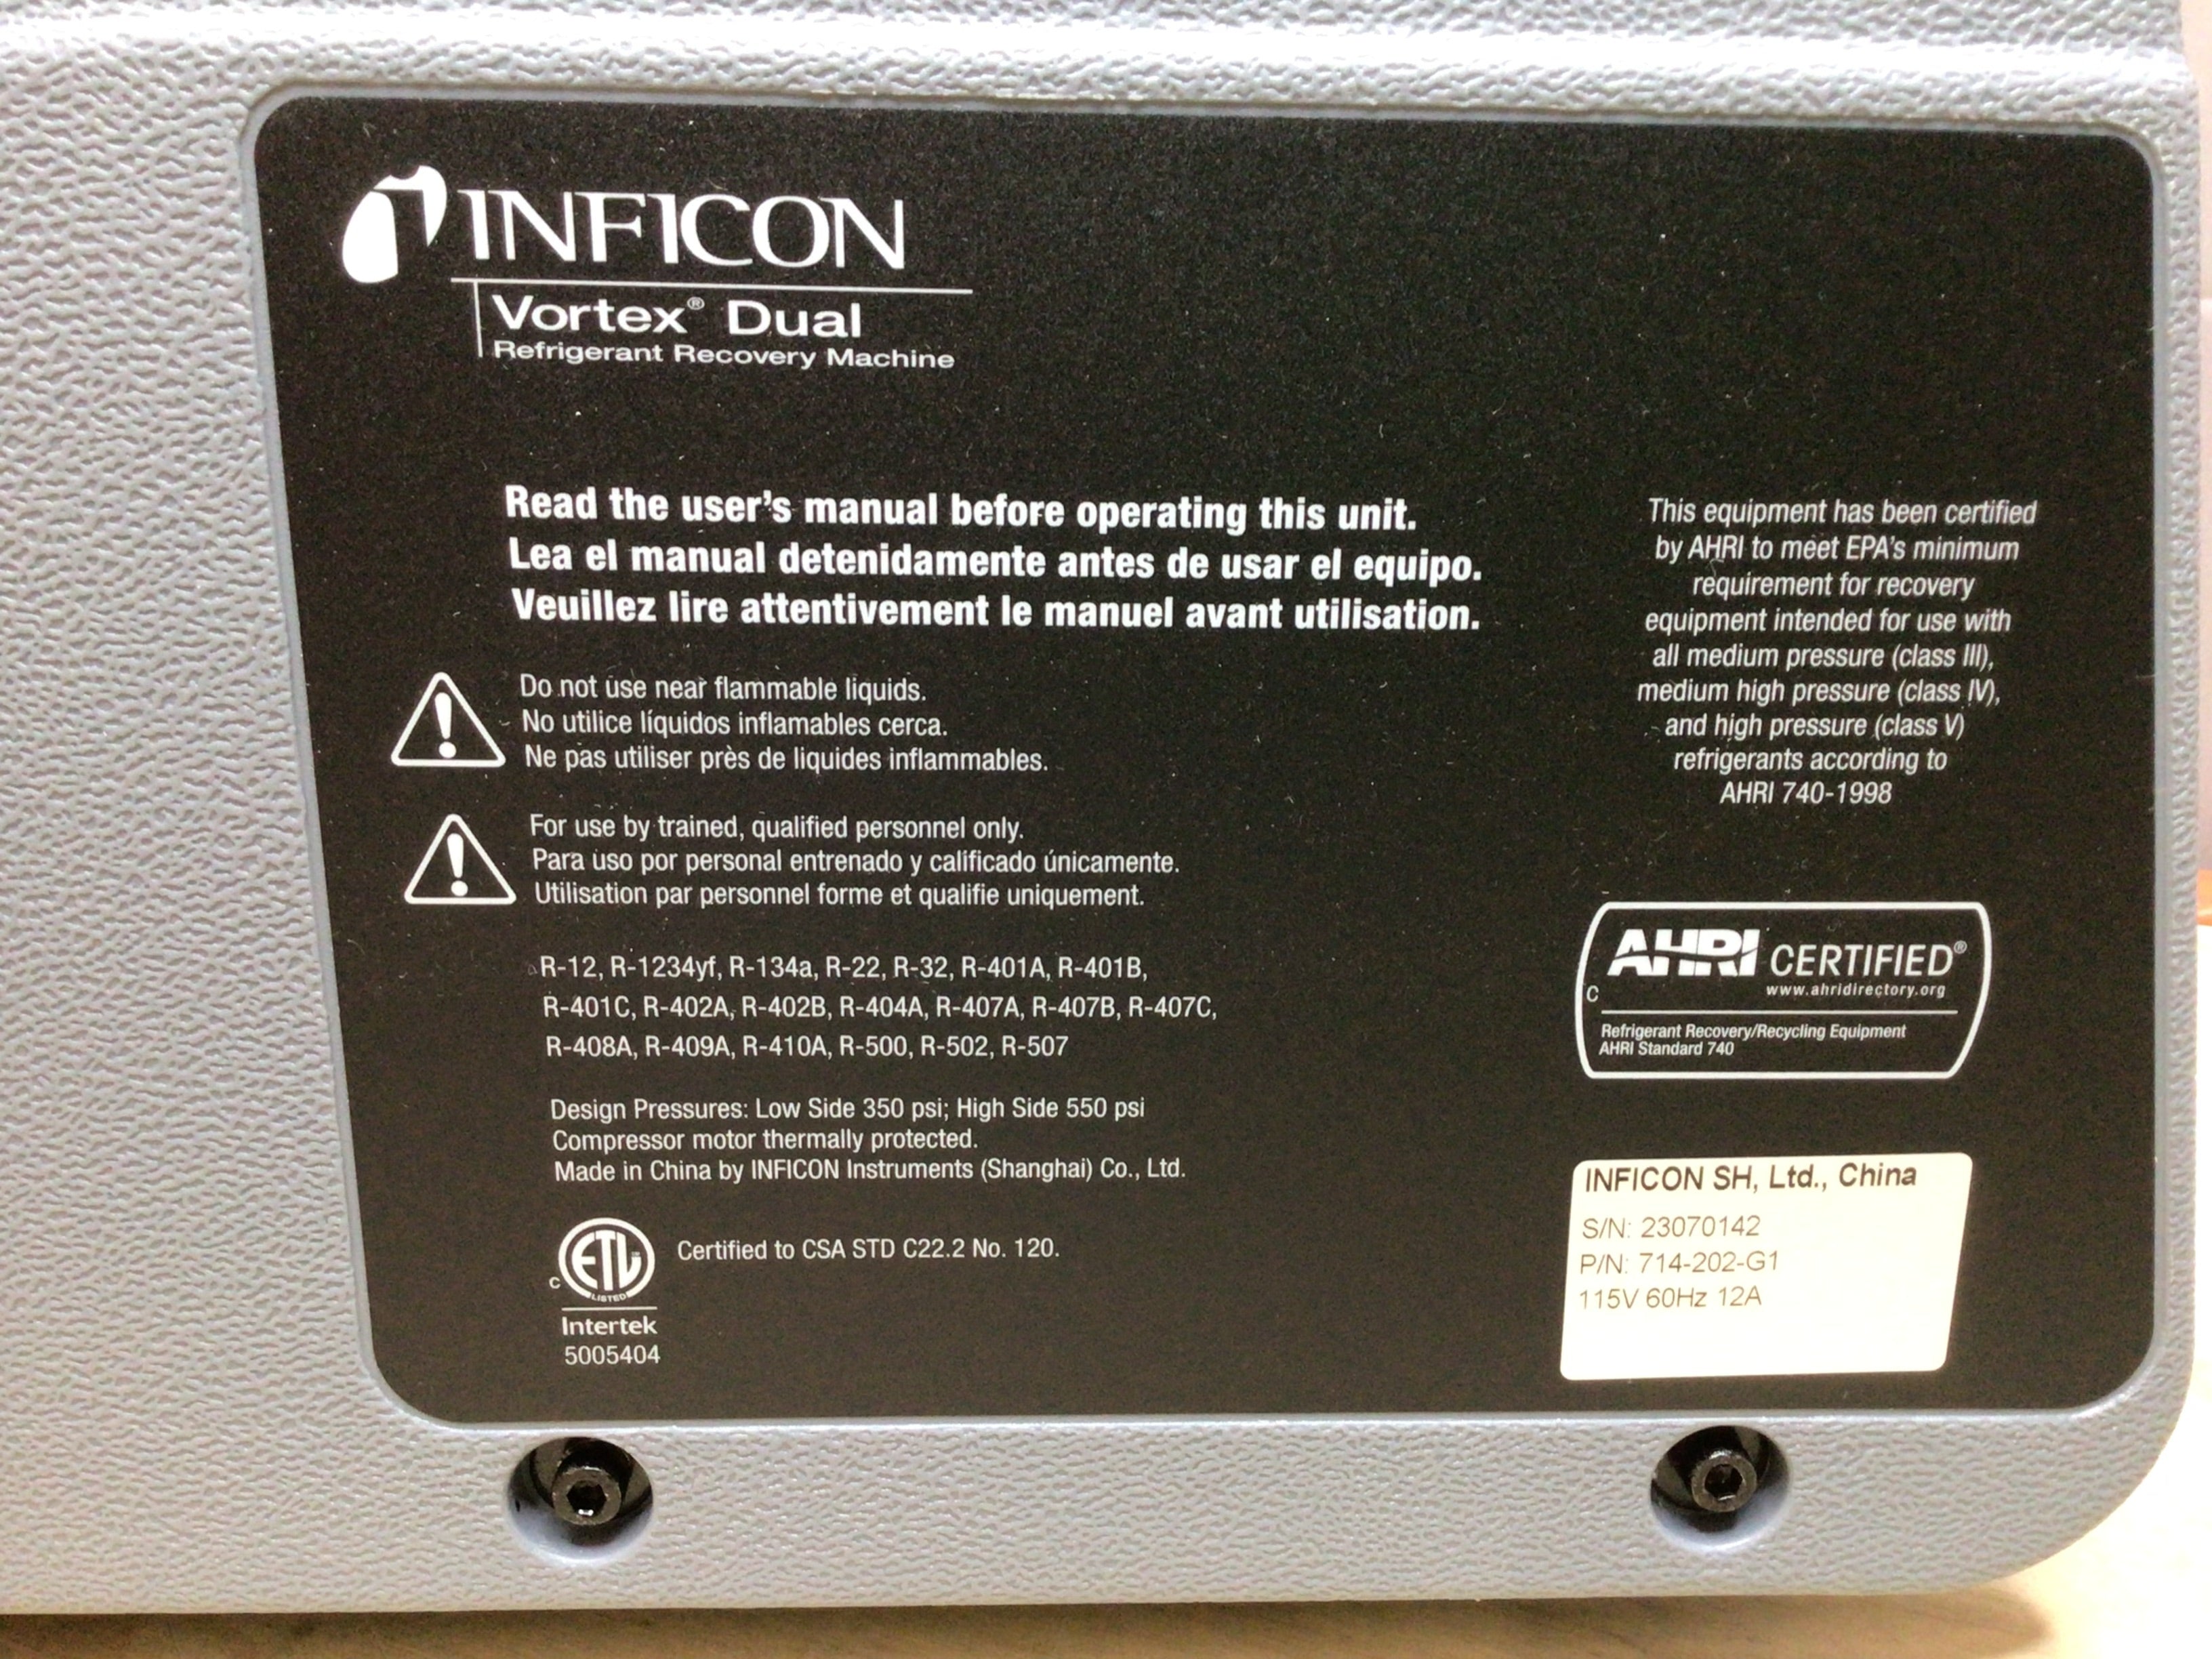 Inficon 714-202-G1 Vortex Dual, Refrigerant Recovery Machine 714202G1 (8120618615022)